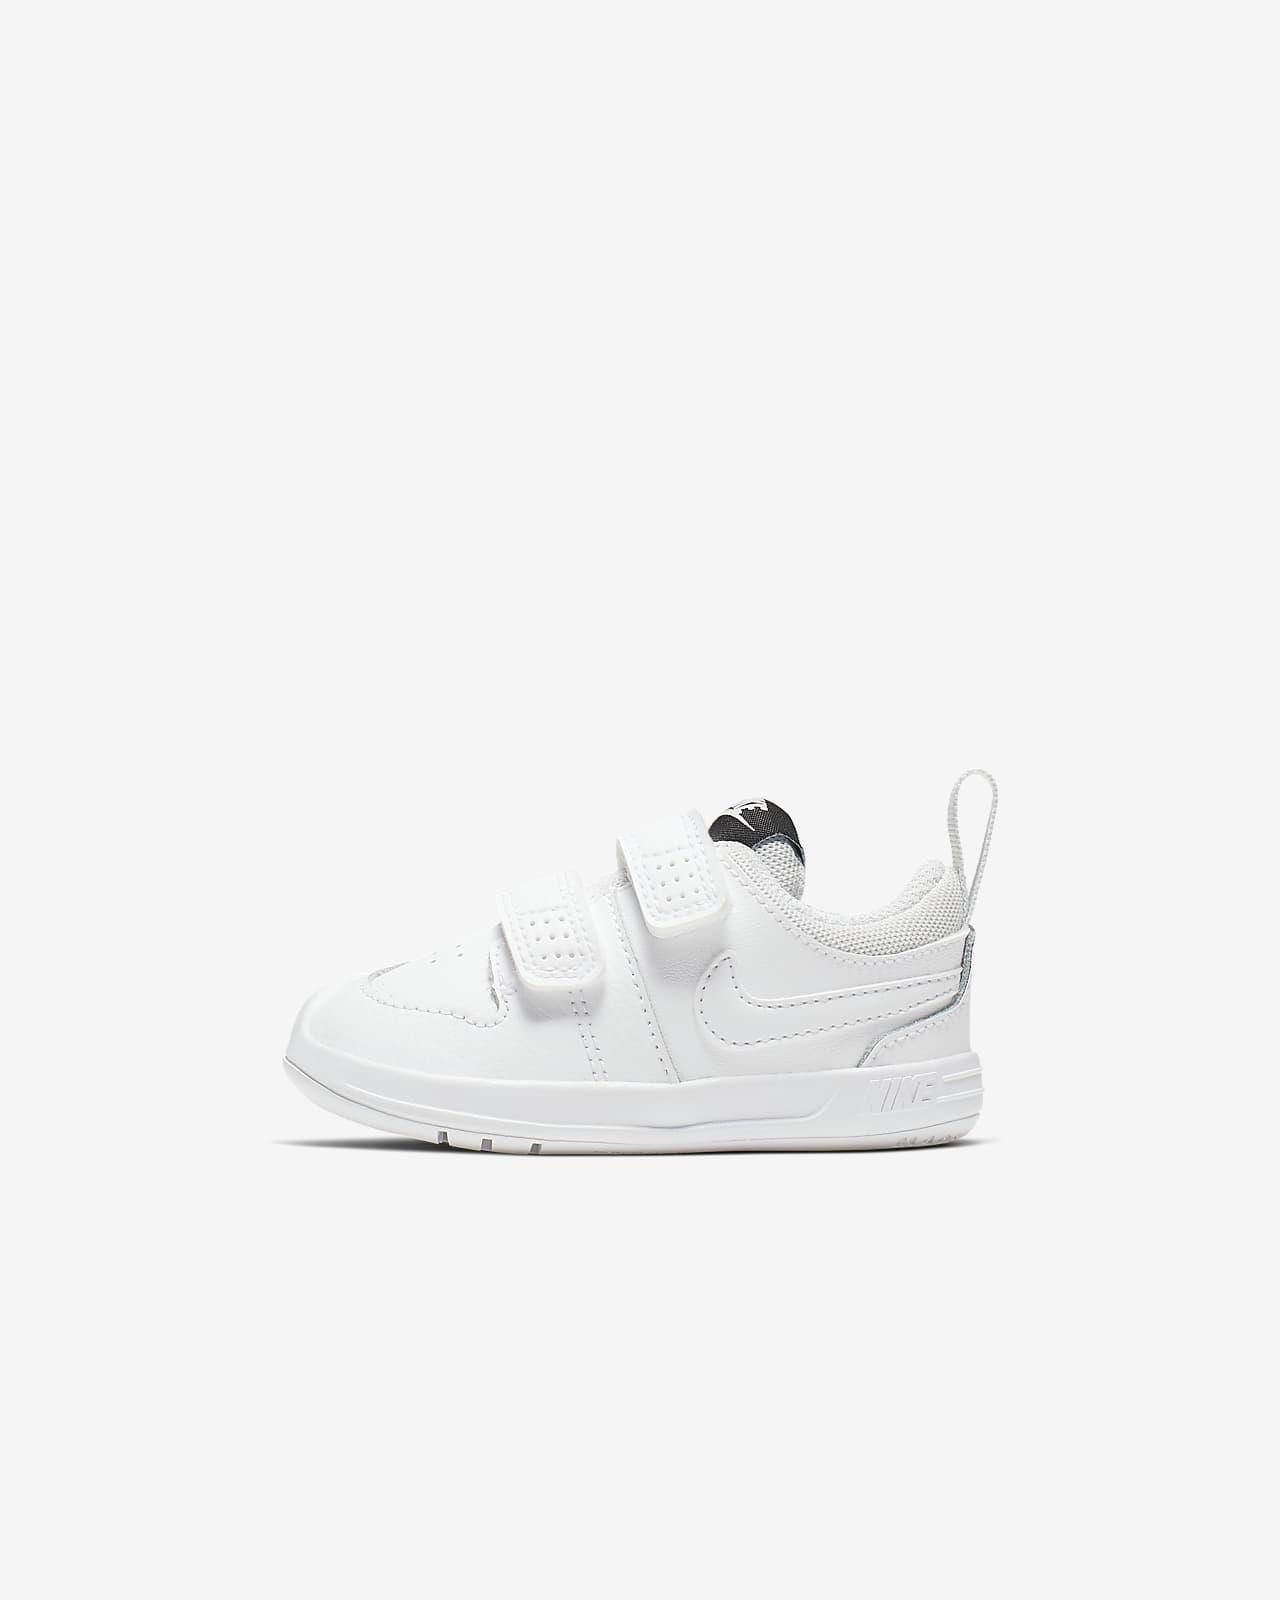 Nike Pico 5-sko til babyer/småbørn